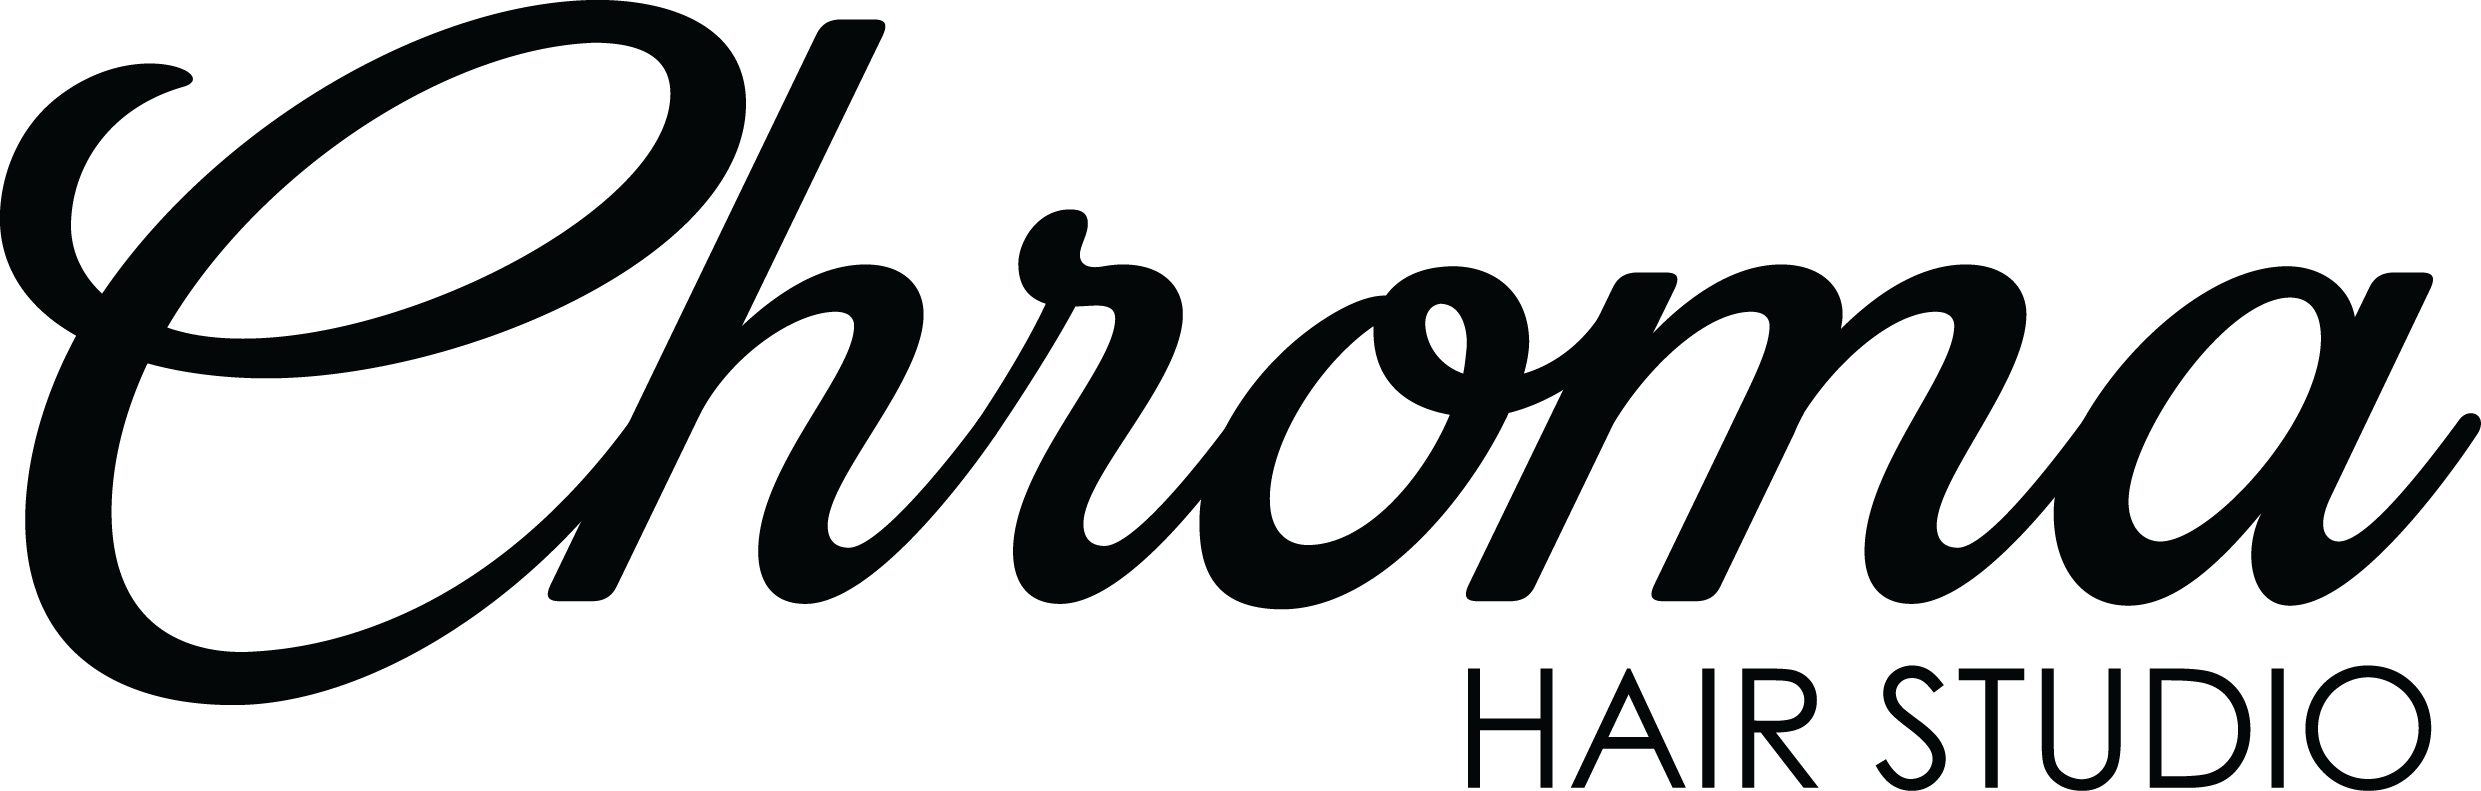 Chroma Hair Studio